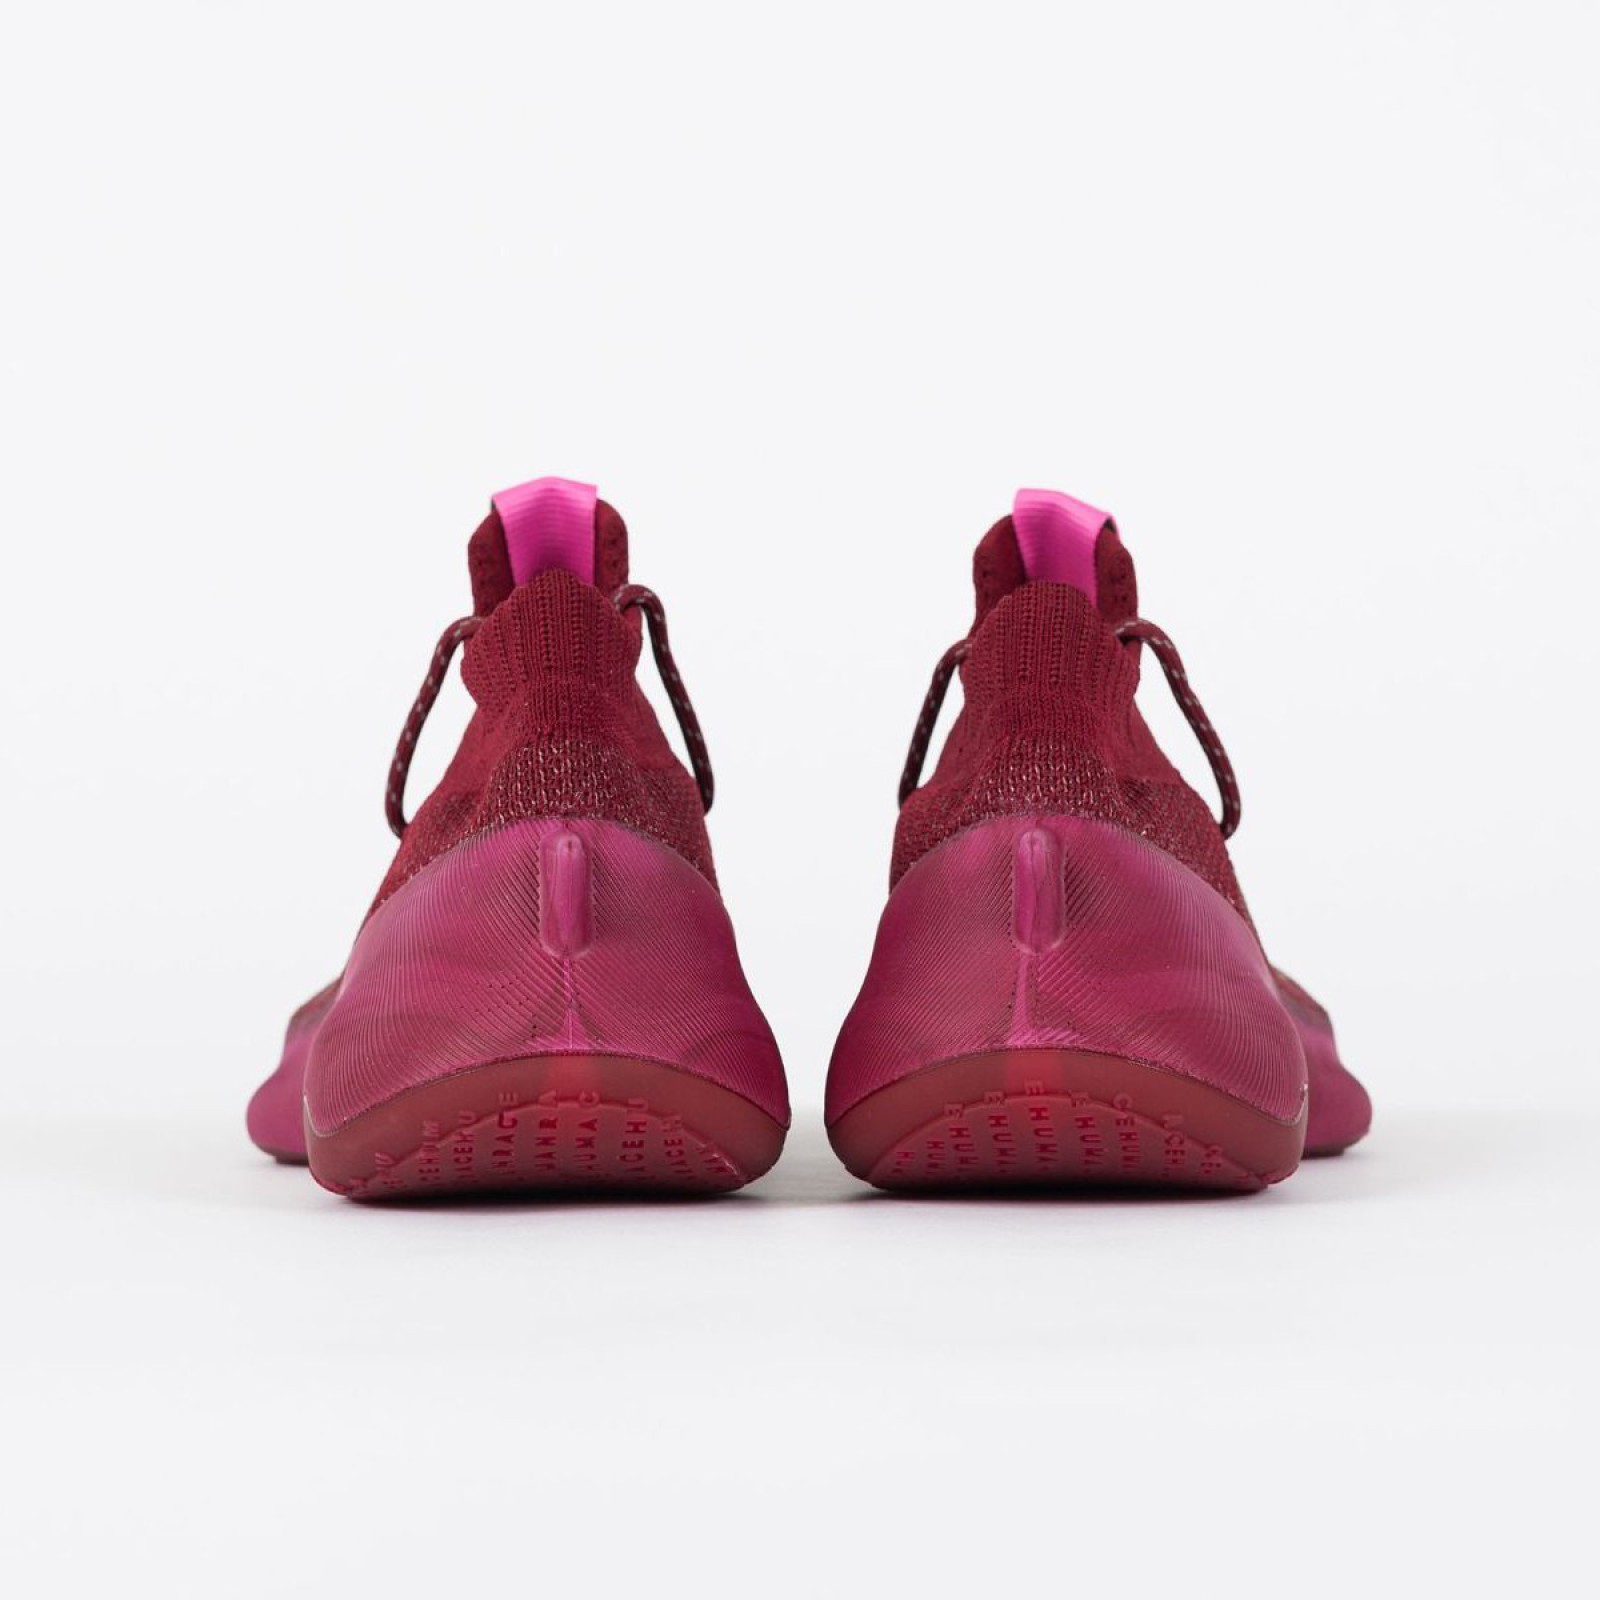 Adidas x Pharrell Williams
Human Race Sichona
Burgundy / Pink